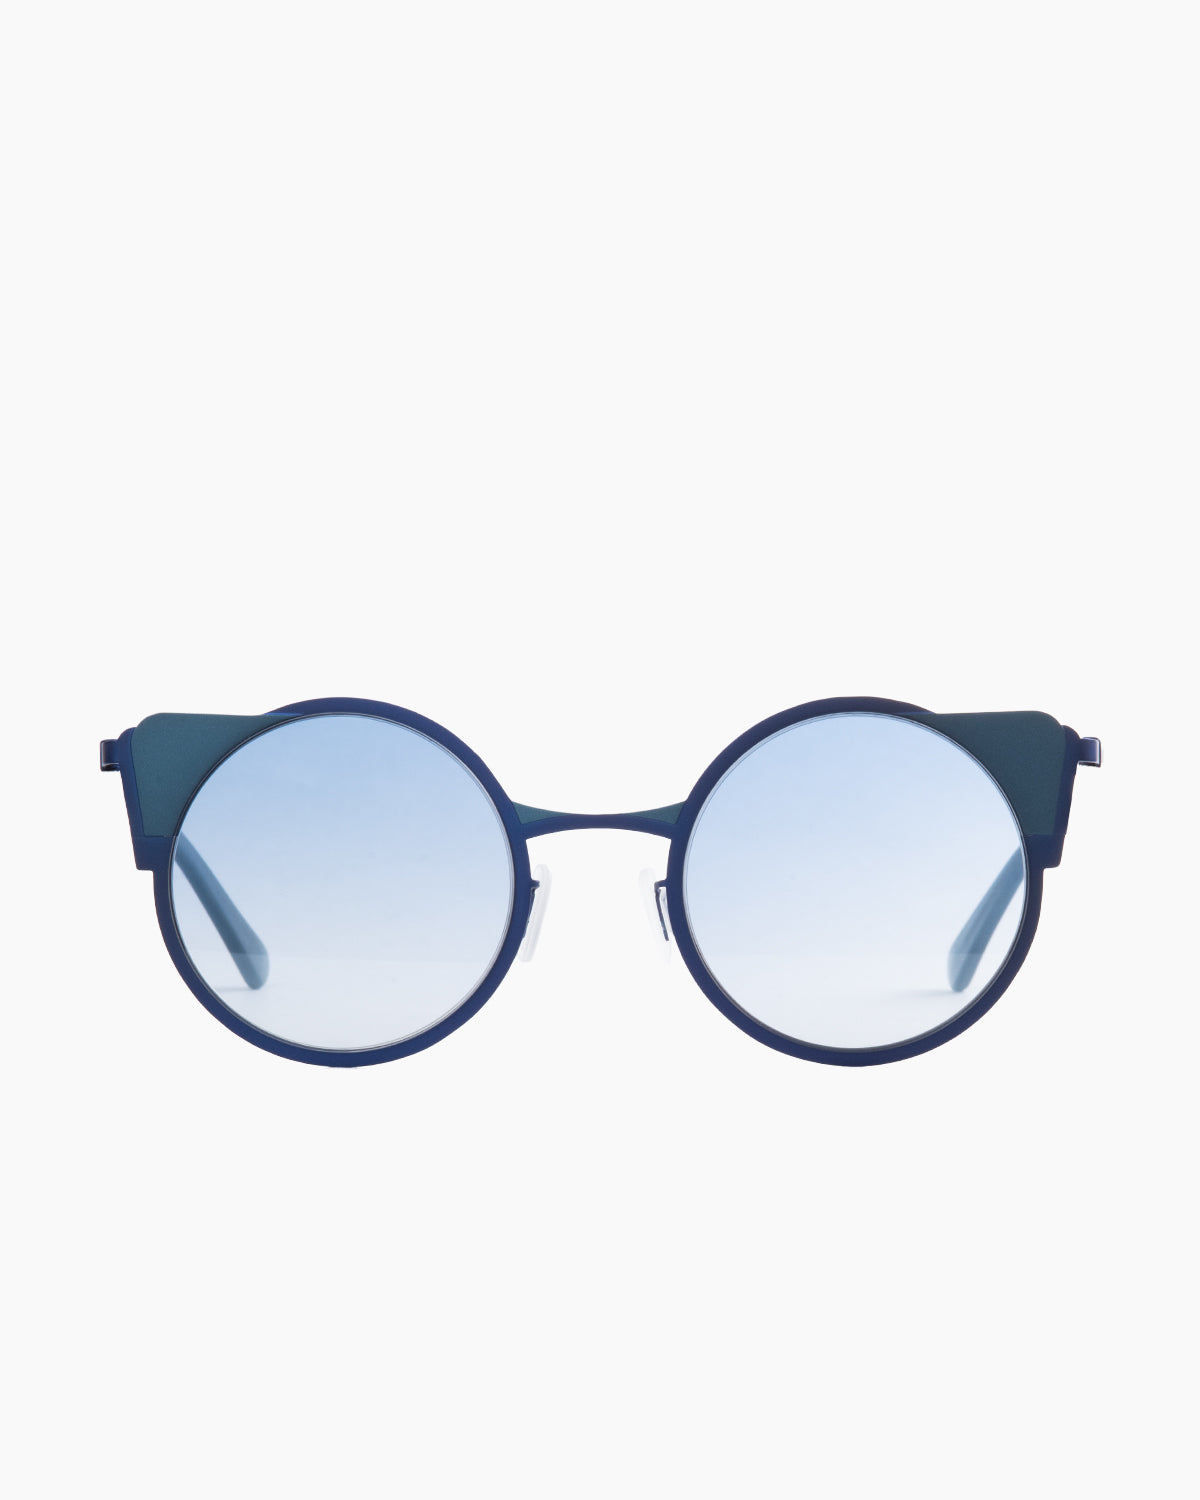 Gamine - Monti S - DarkBlue | Bar à lunettes